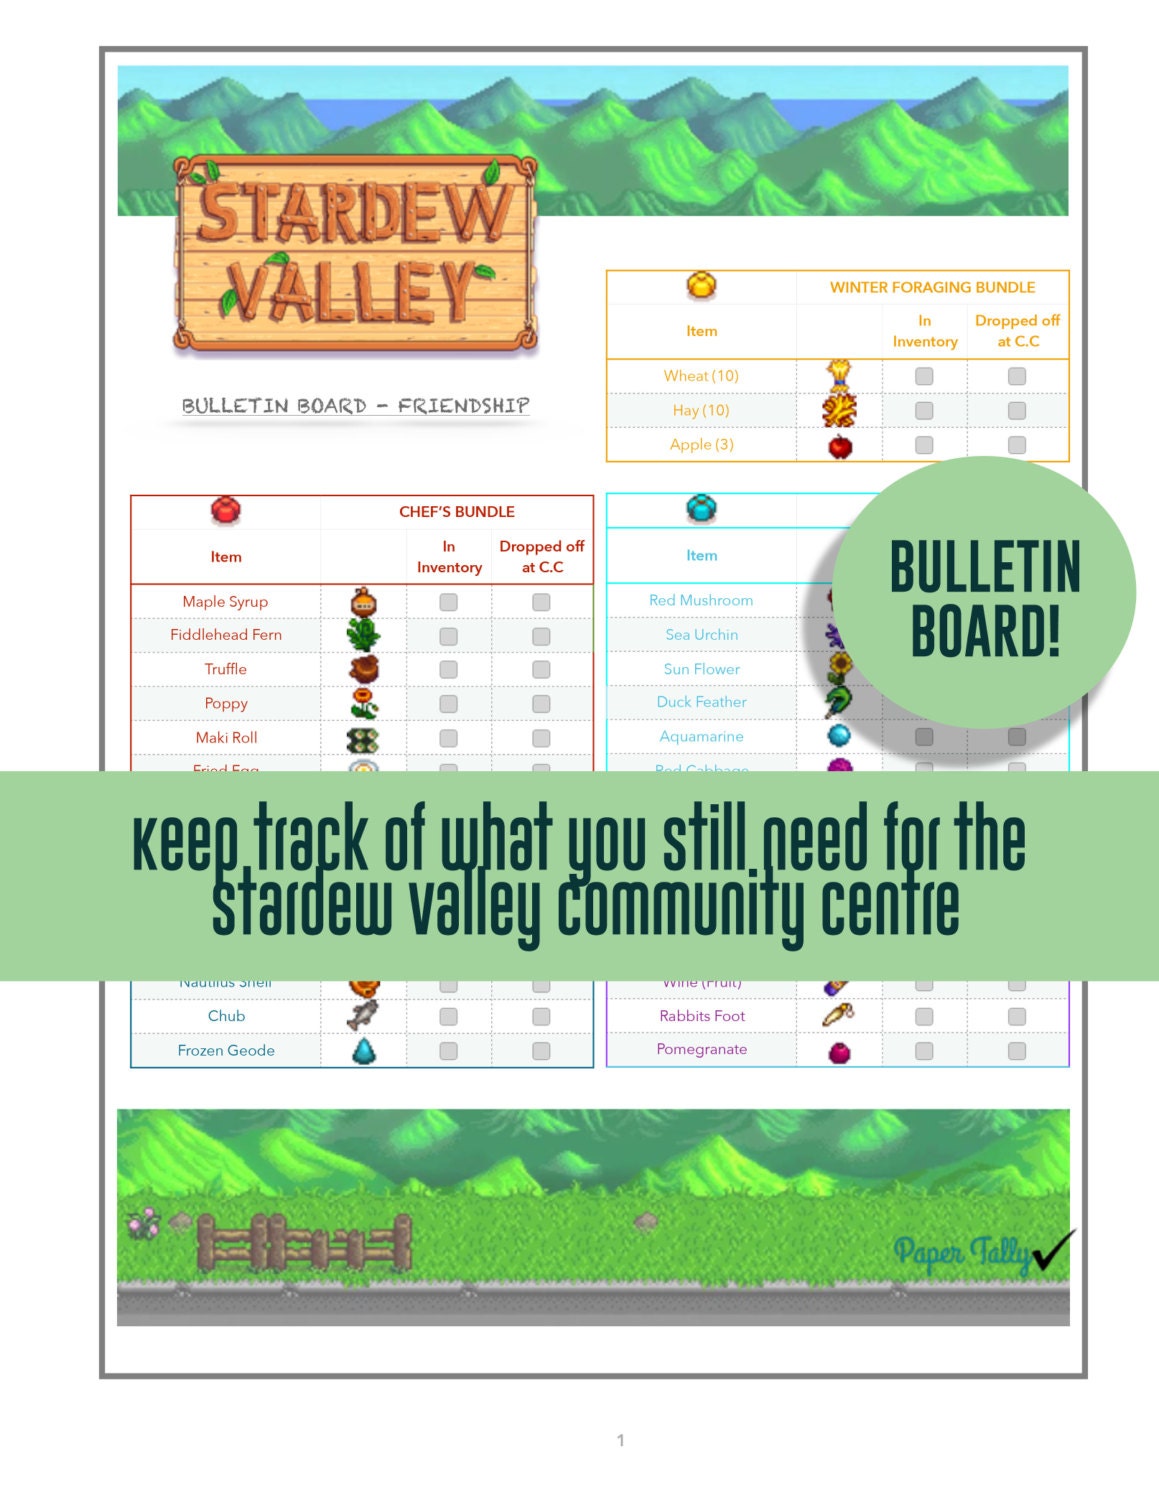 Stardew Valley checklist bulletin board community center